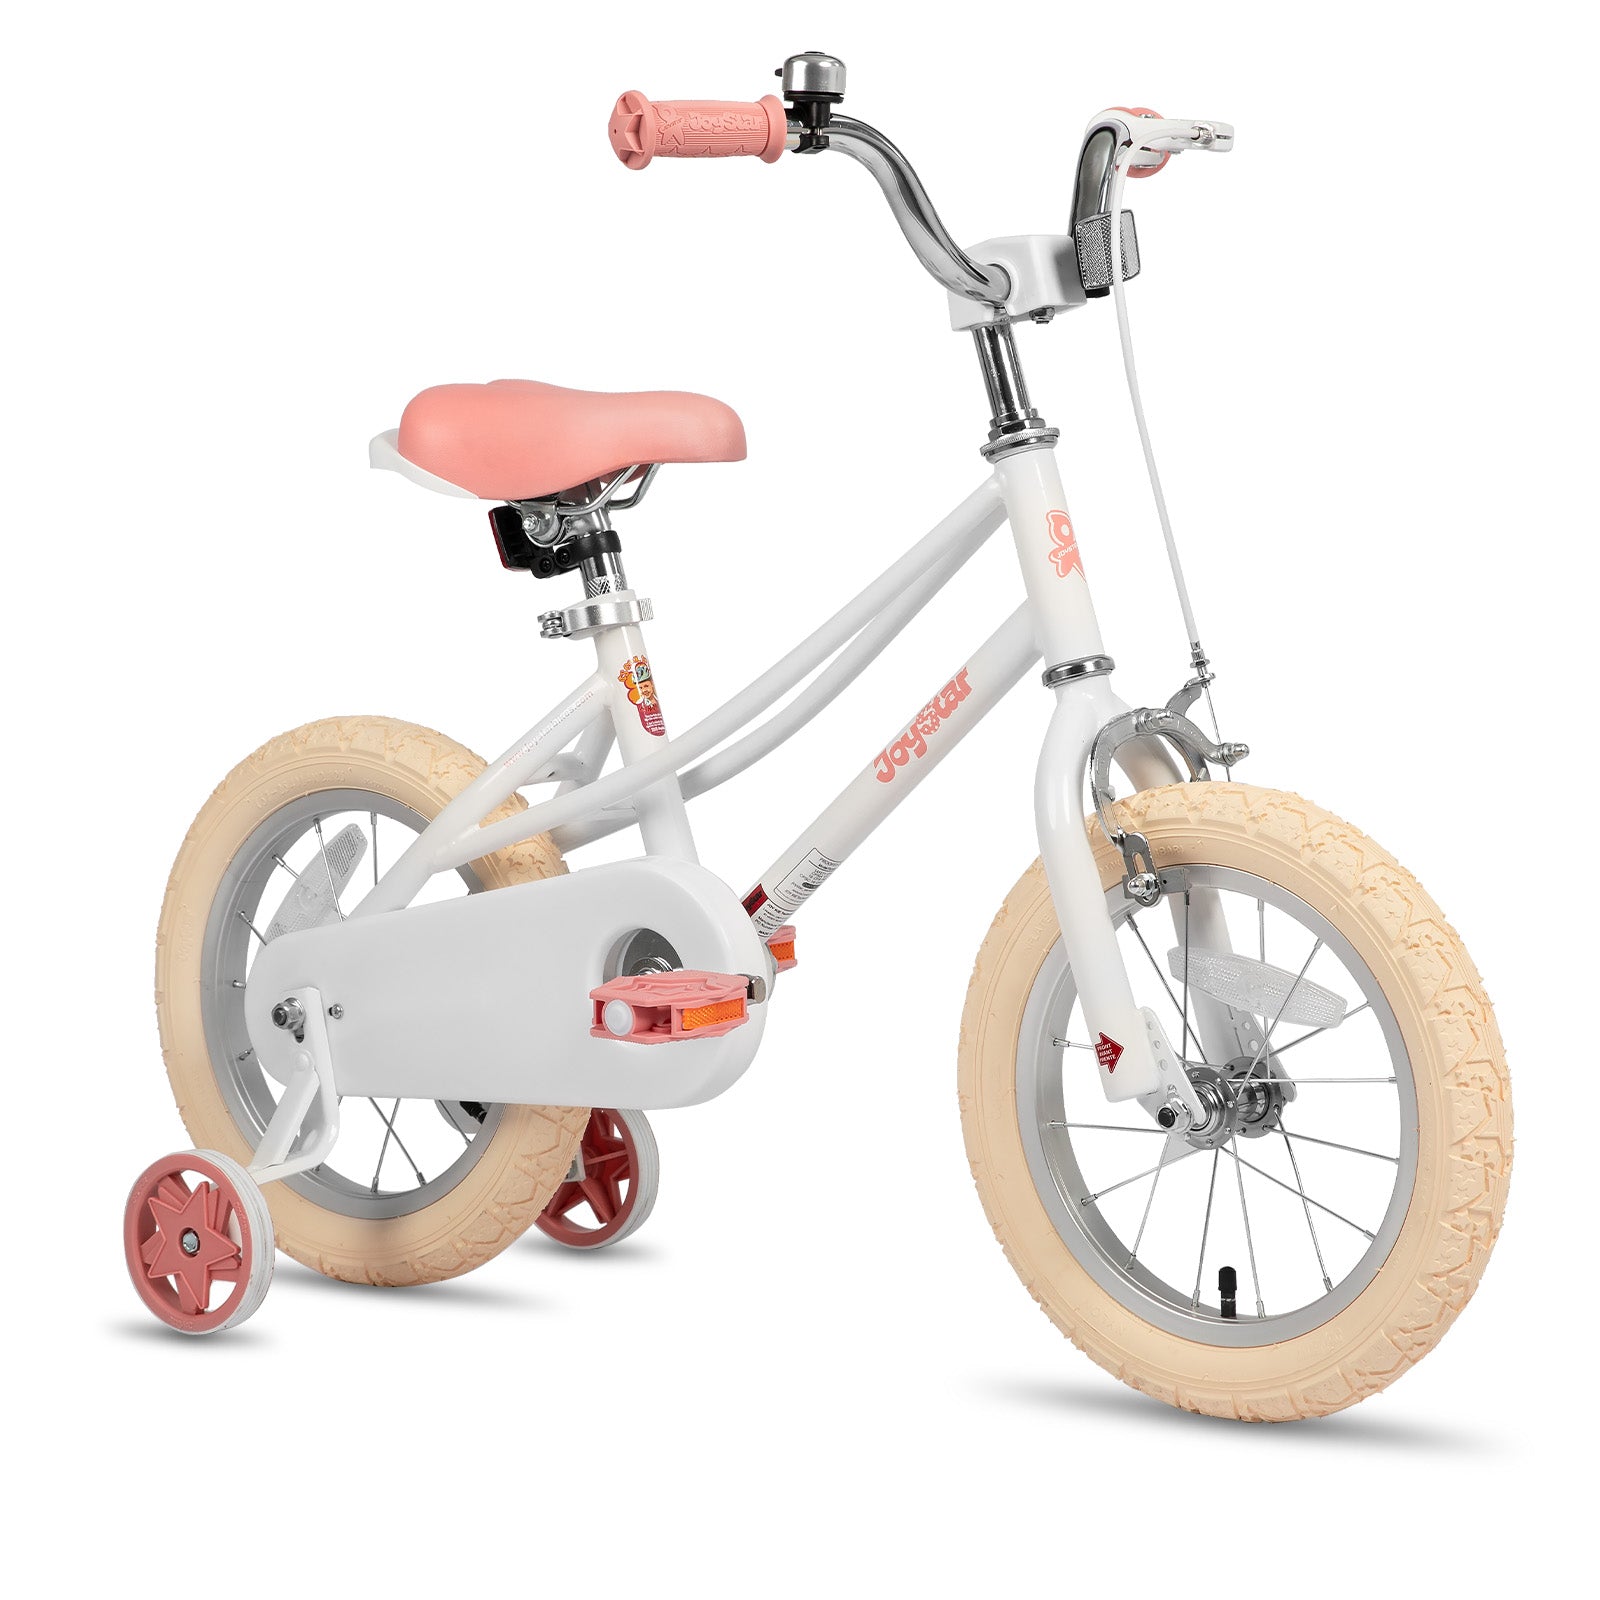 JOYSTAR Vintage 12 inch Kids Bike with Basket & Training Wheels for 2-7 Years Old Girls & Boys (Pink)